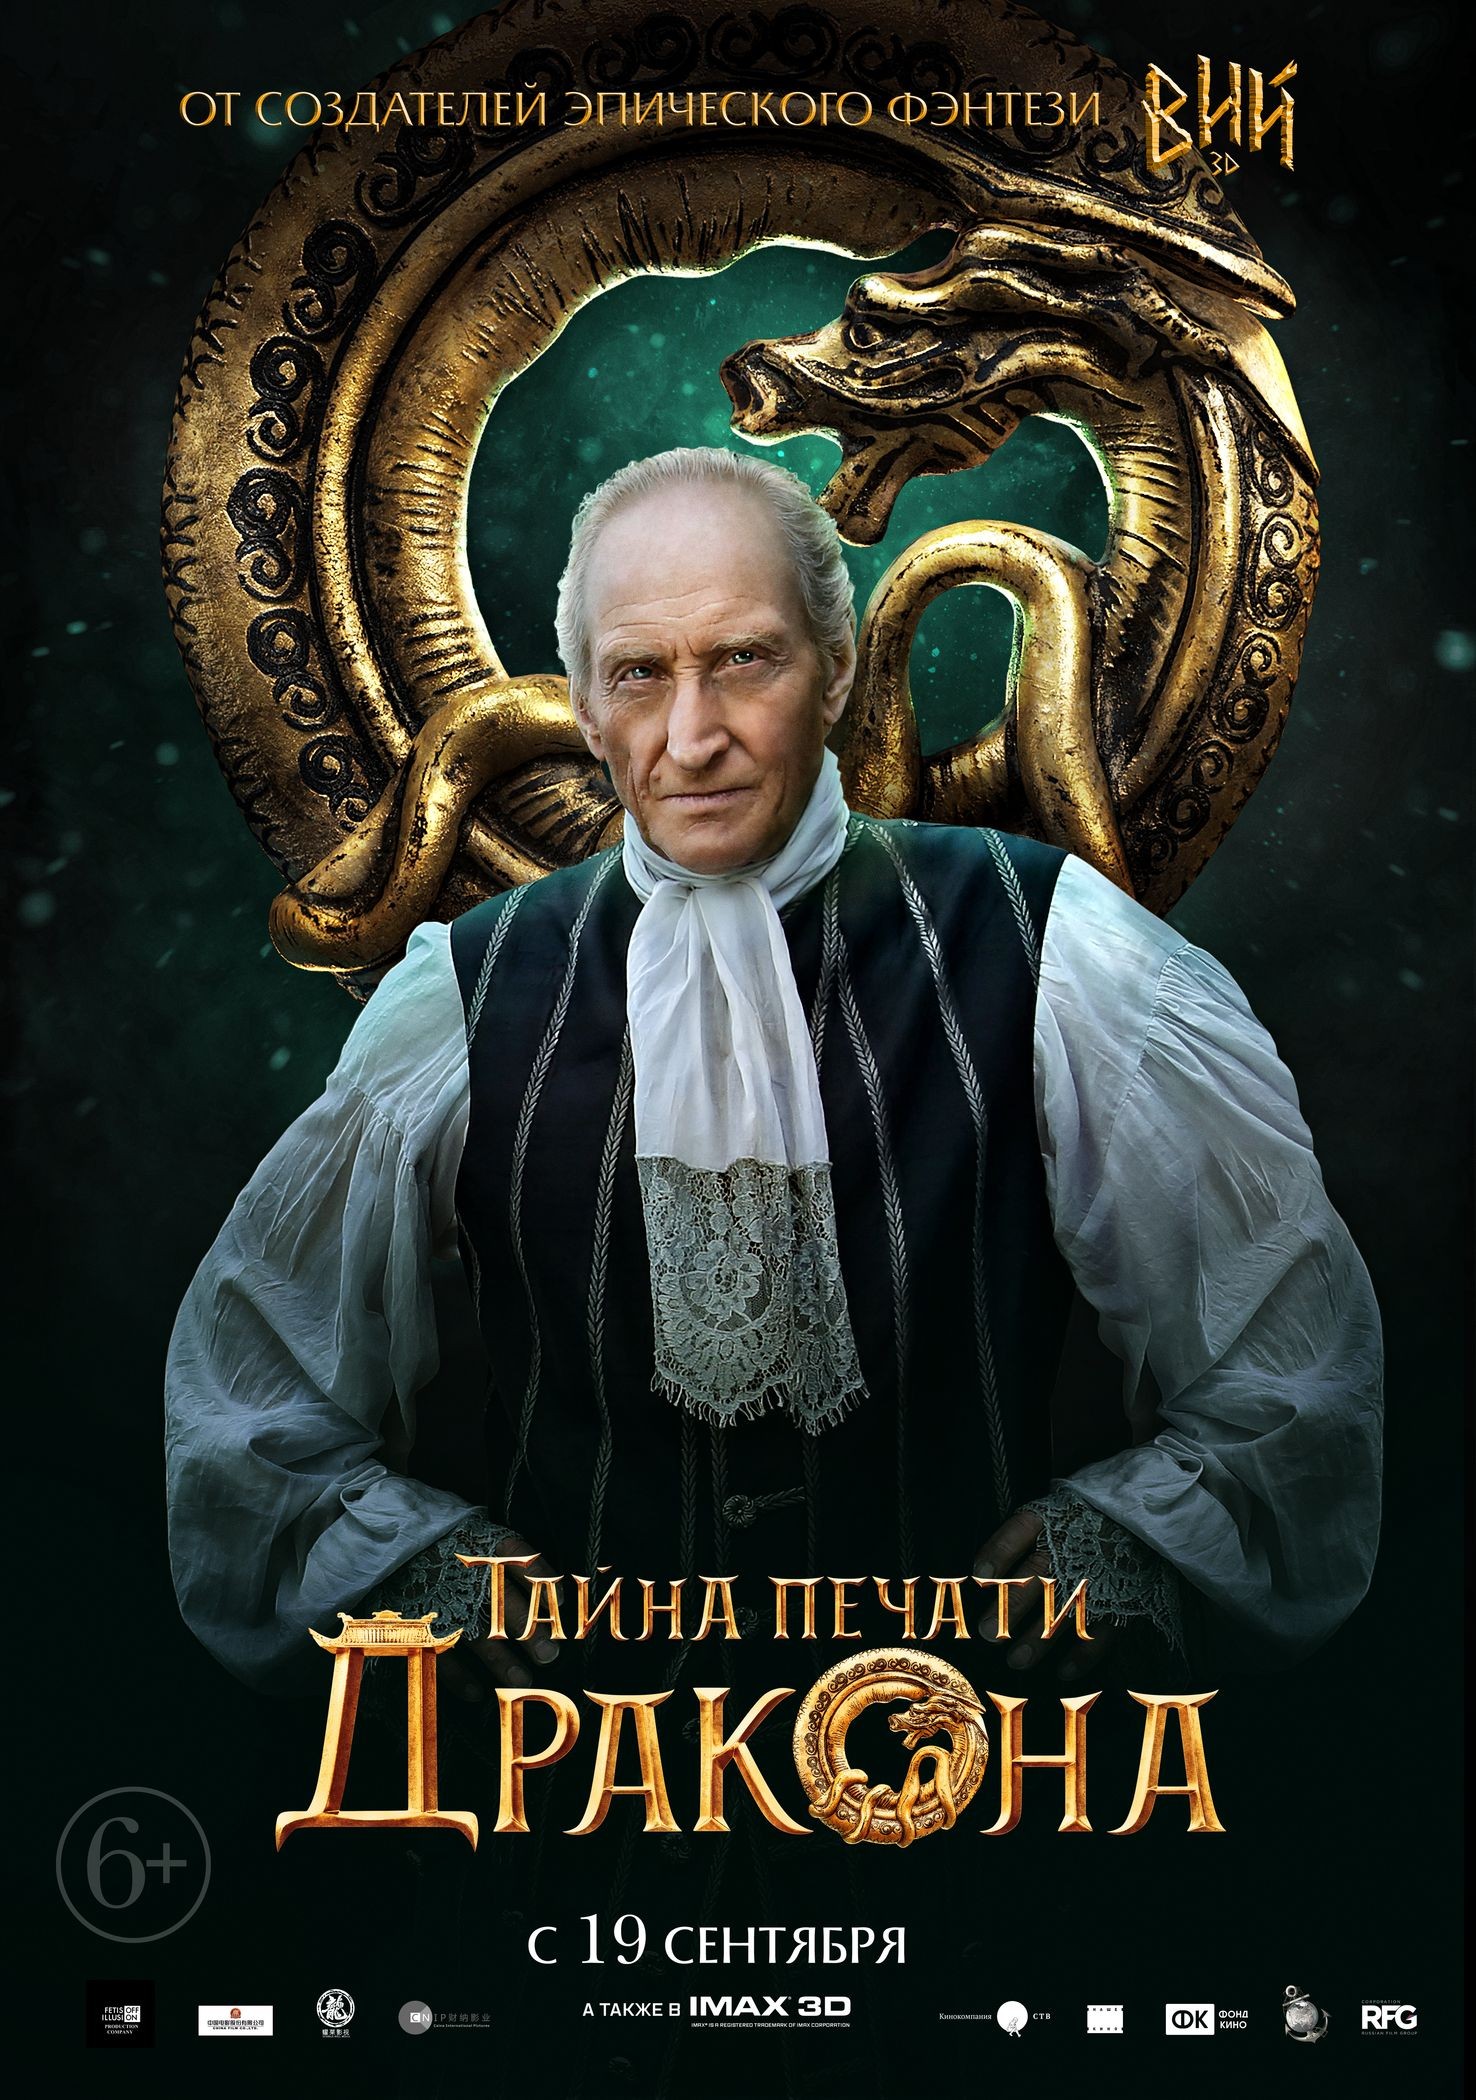 Тайна печати дракона: постер N160302